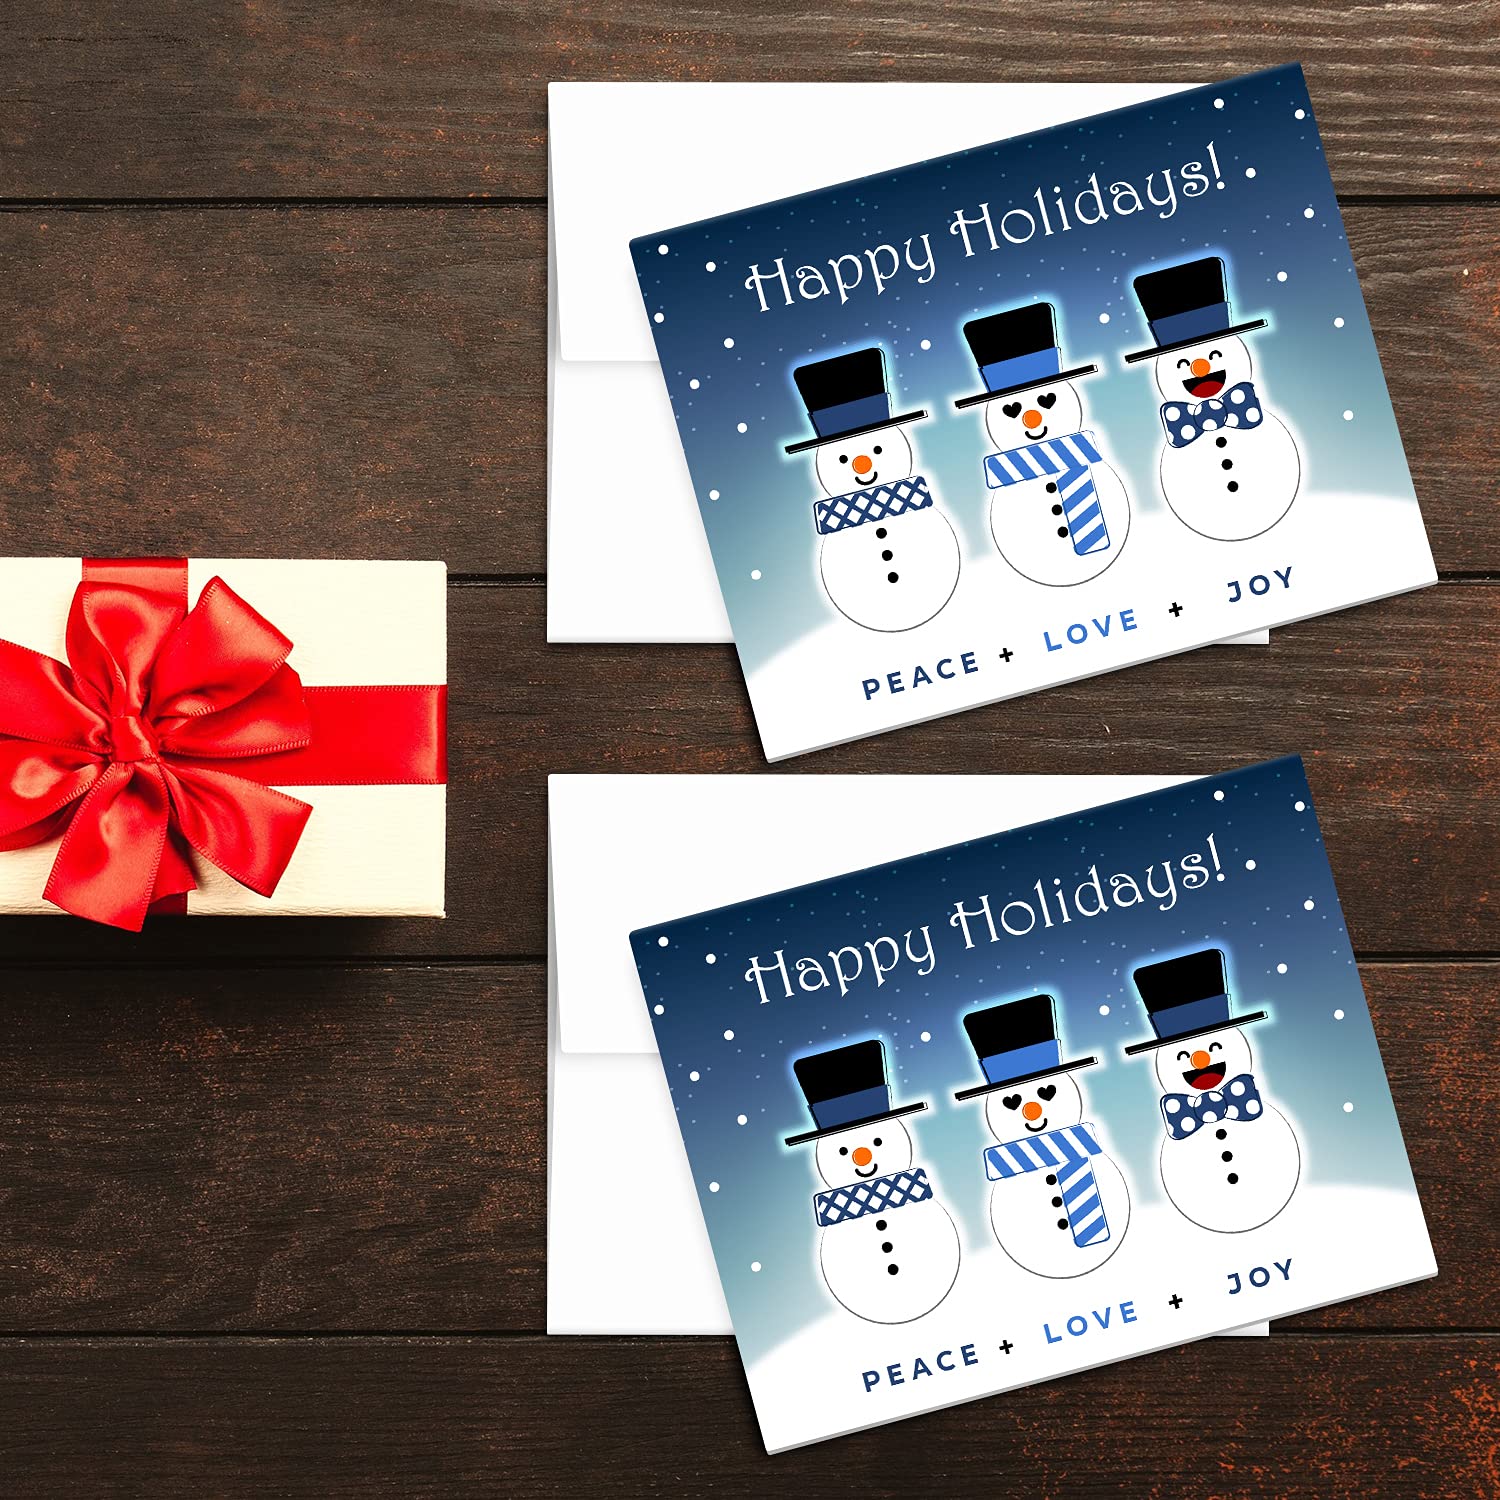 2023 Happy Holidays, Peace Love & Joy Greeting Cards & Envelopes Set of 25 FoldCard